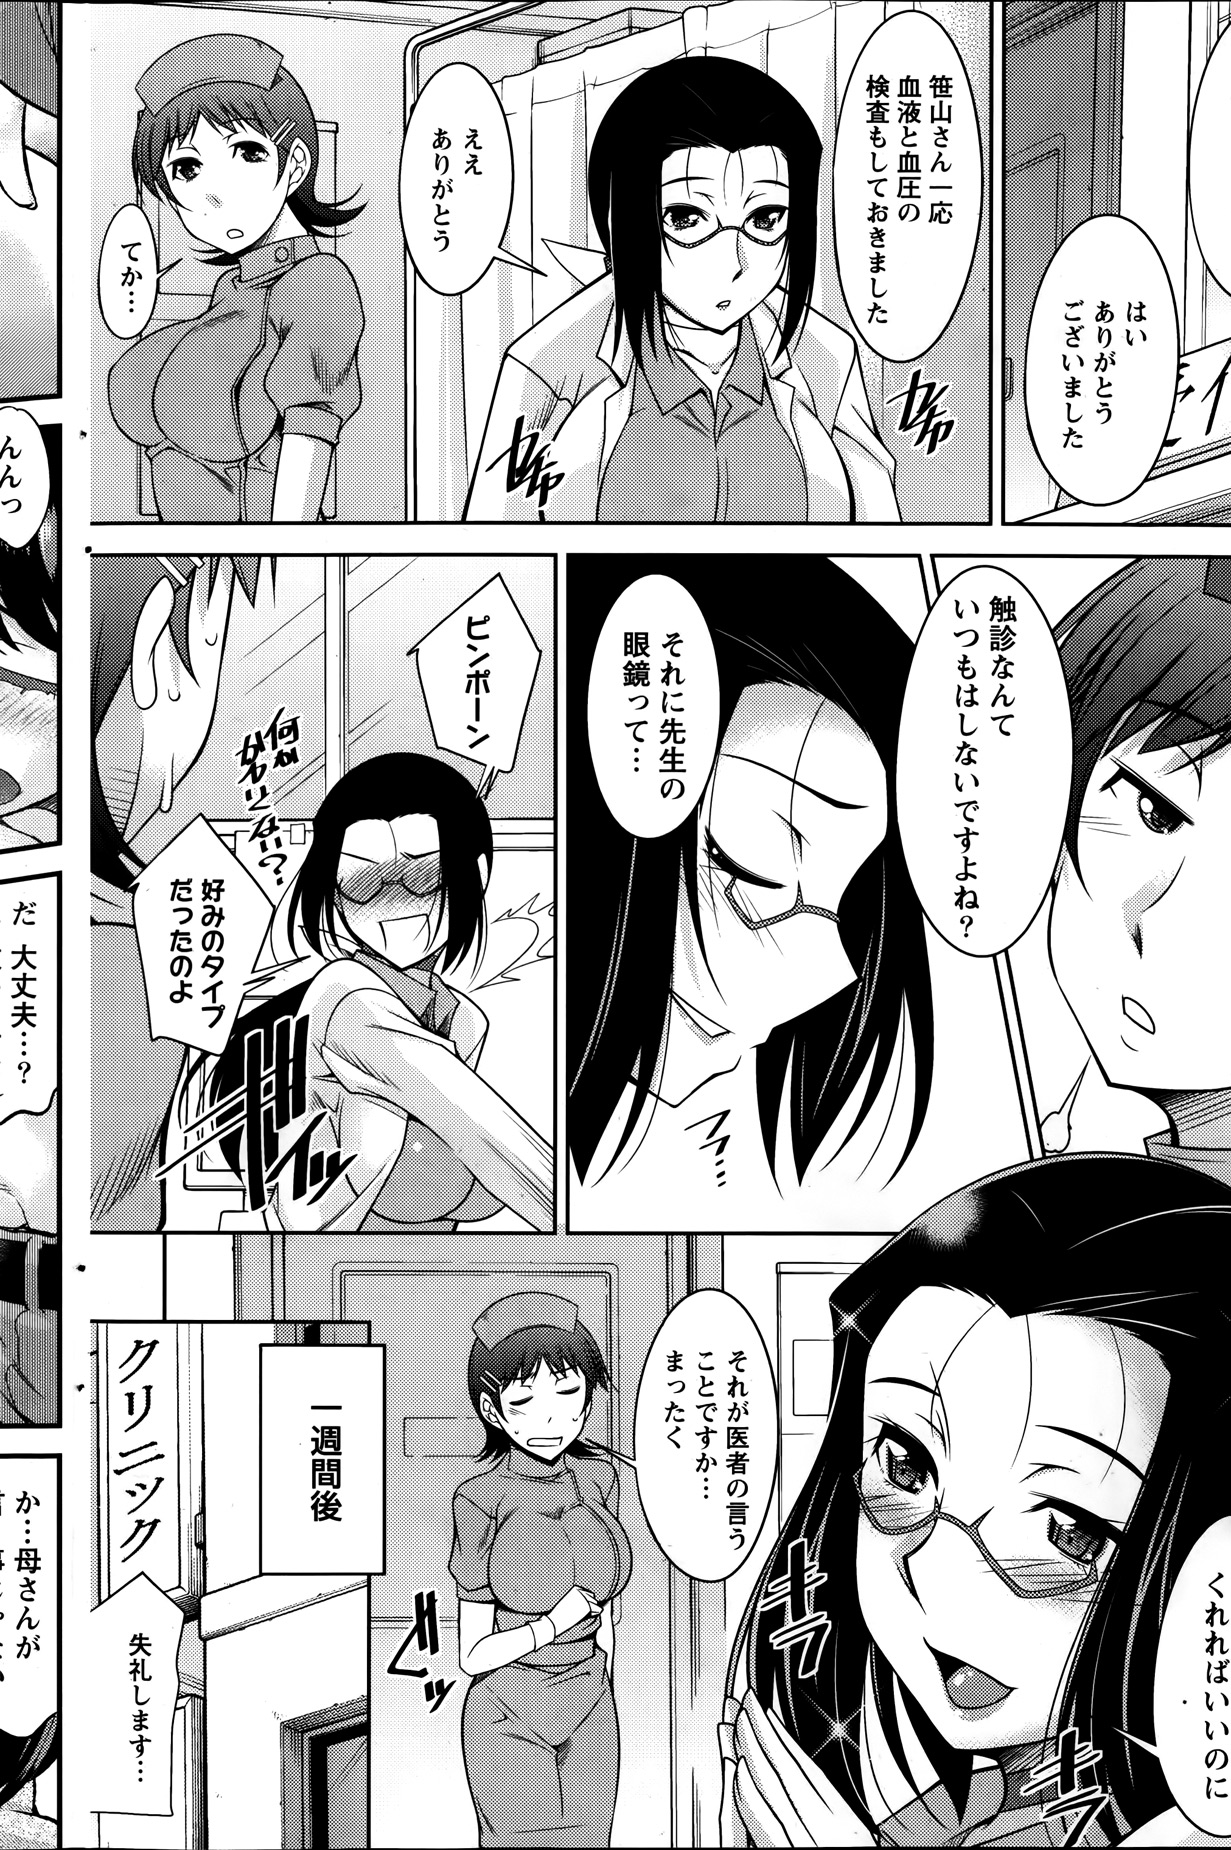 [Zen9] Kimi no Megane ni Yokujou Suru. Ch. 1-9 [Zen9] 君の眼鏡に欲情する。 第1-9章